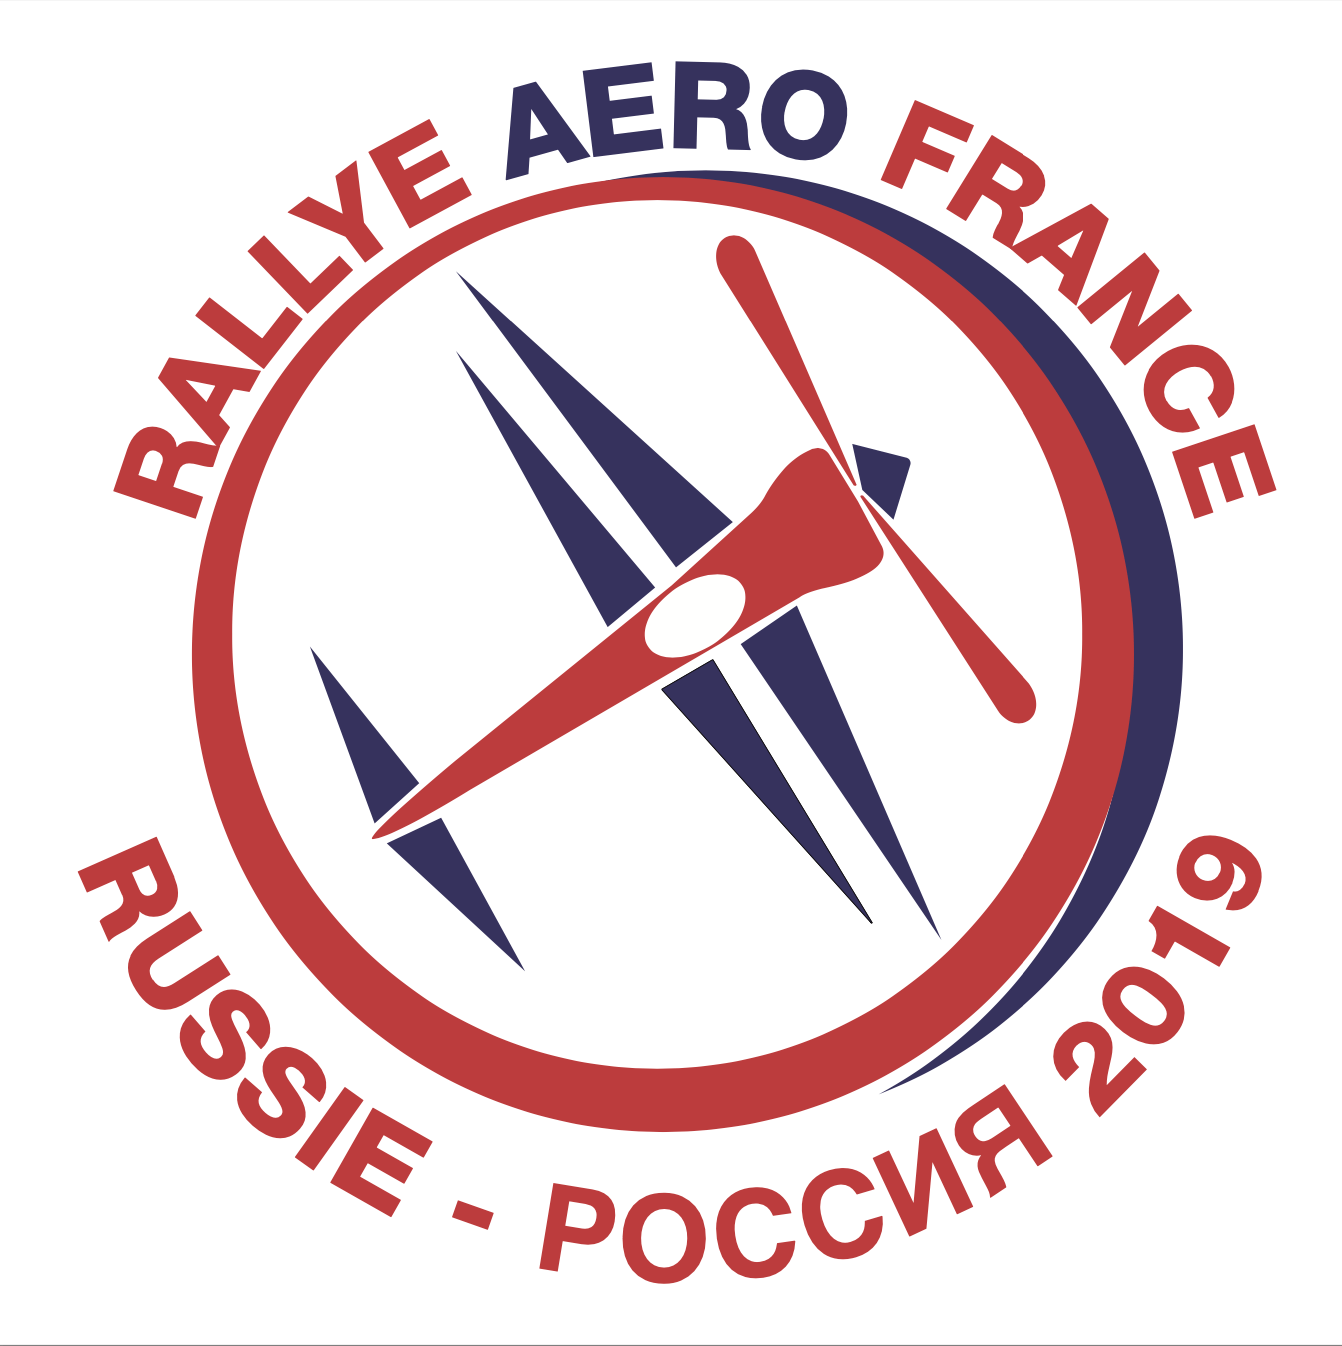 Rallye Aéro France